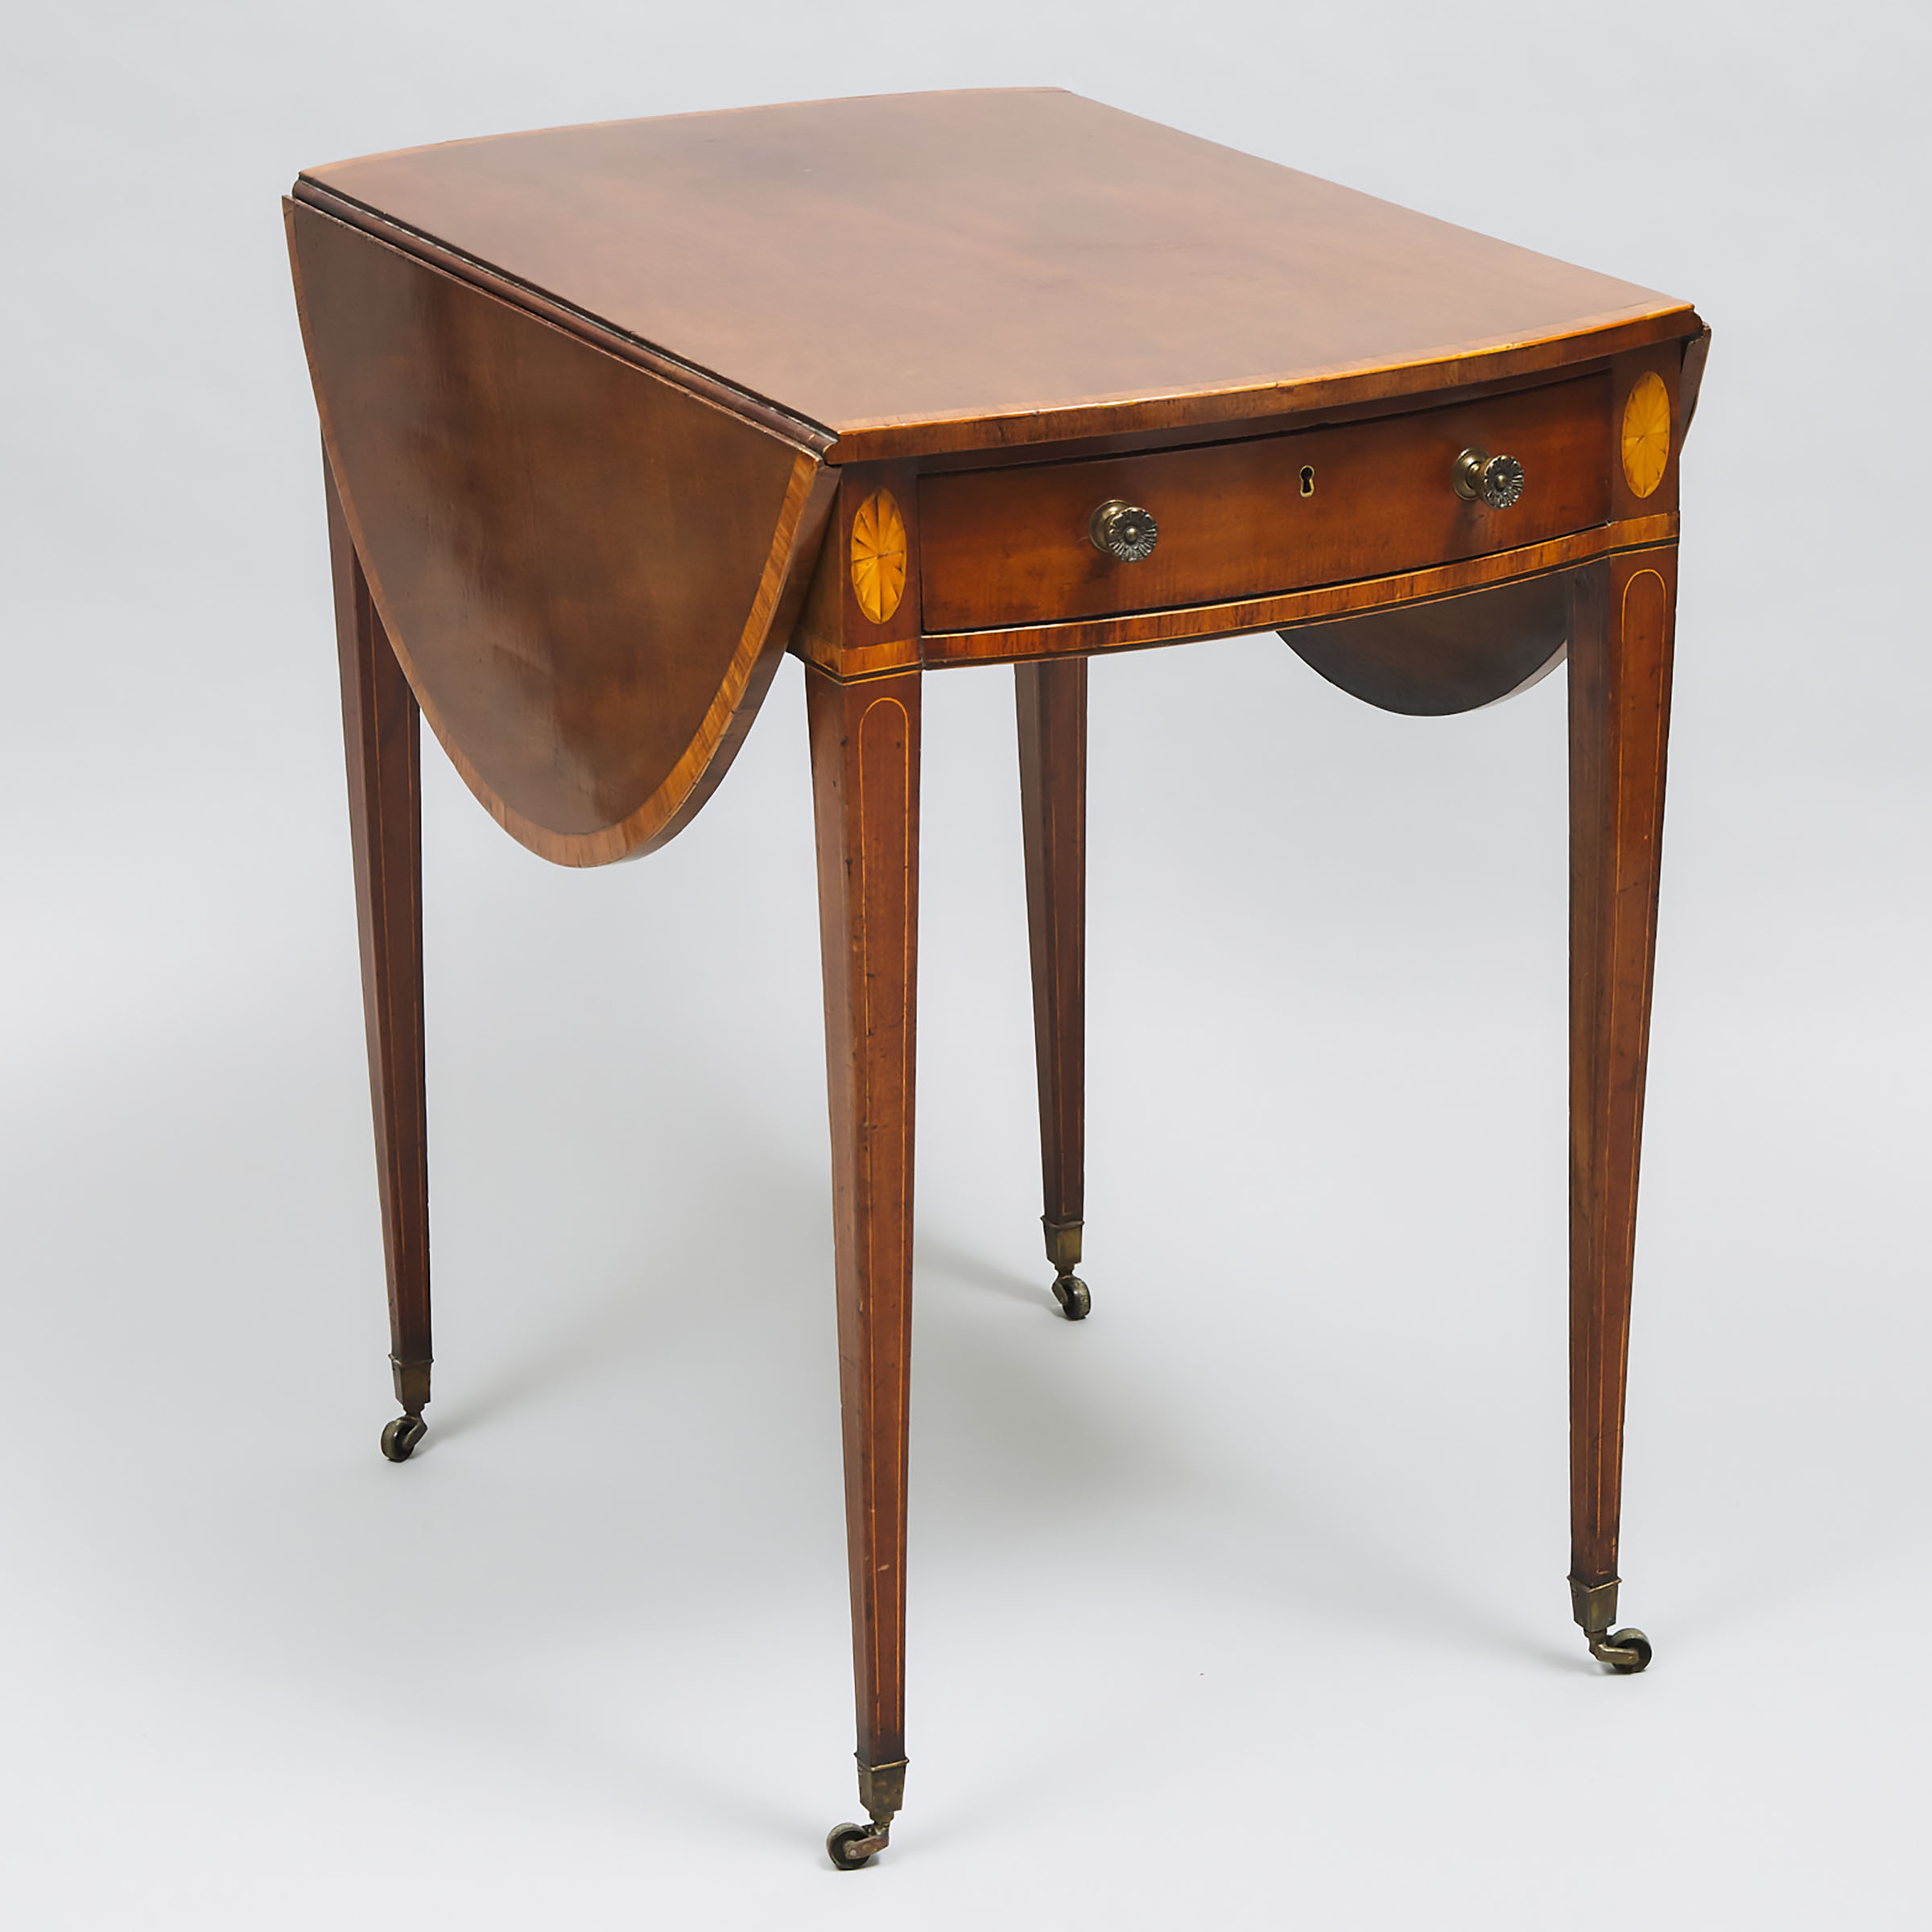 Small Oval Crossbanded Mahogany Pembroke Table, early 19th century